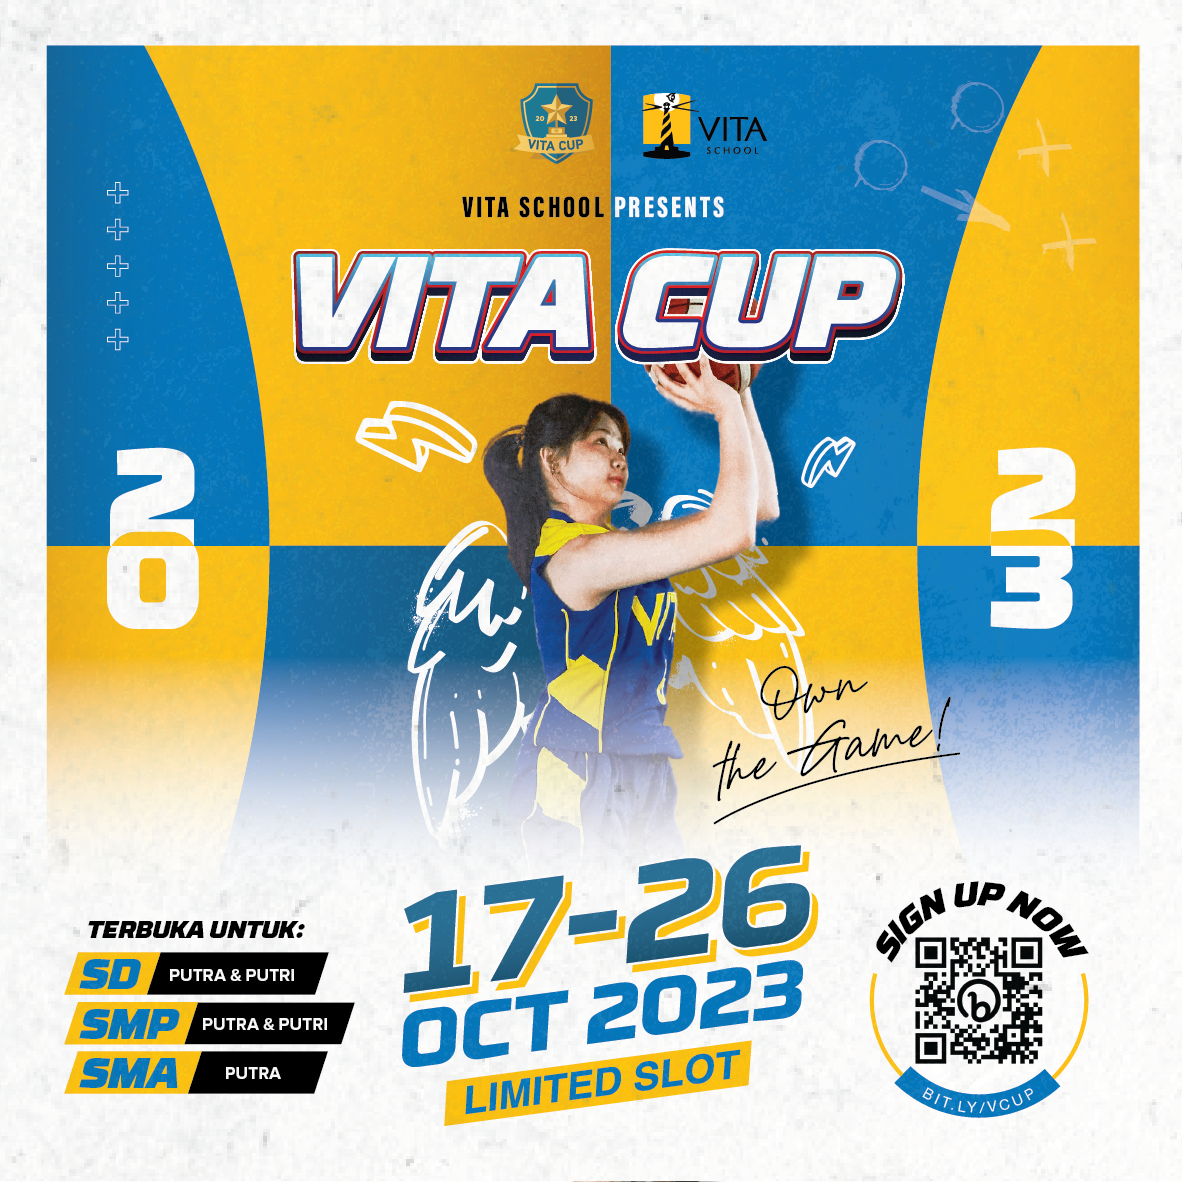 VITA Cup 2023/2024